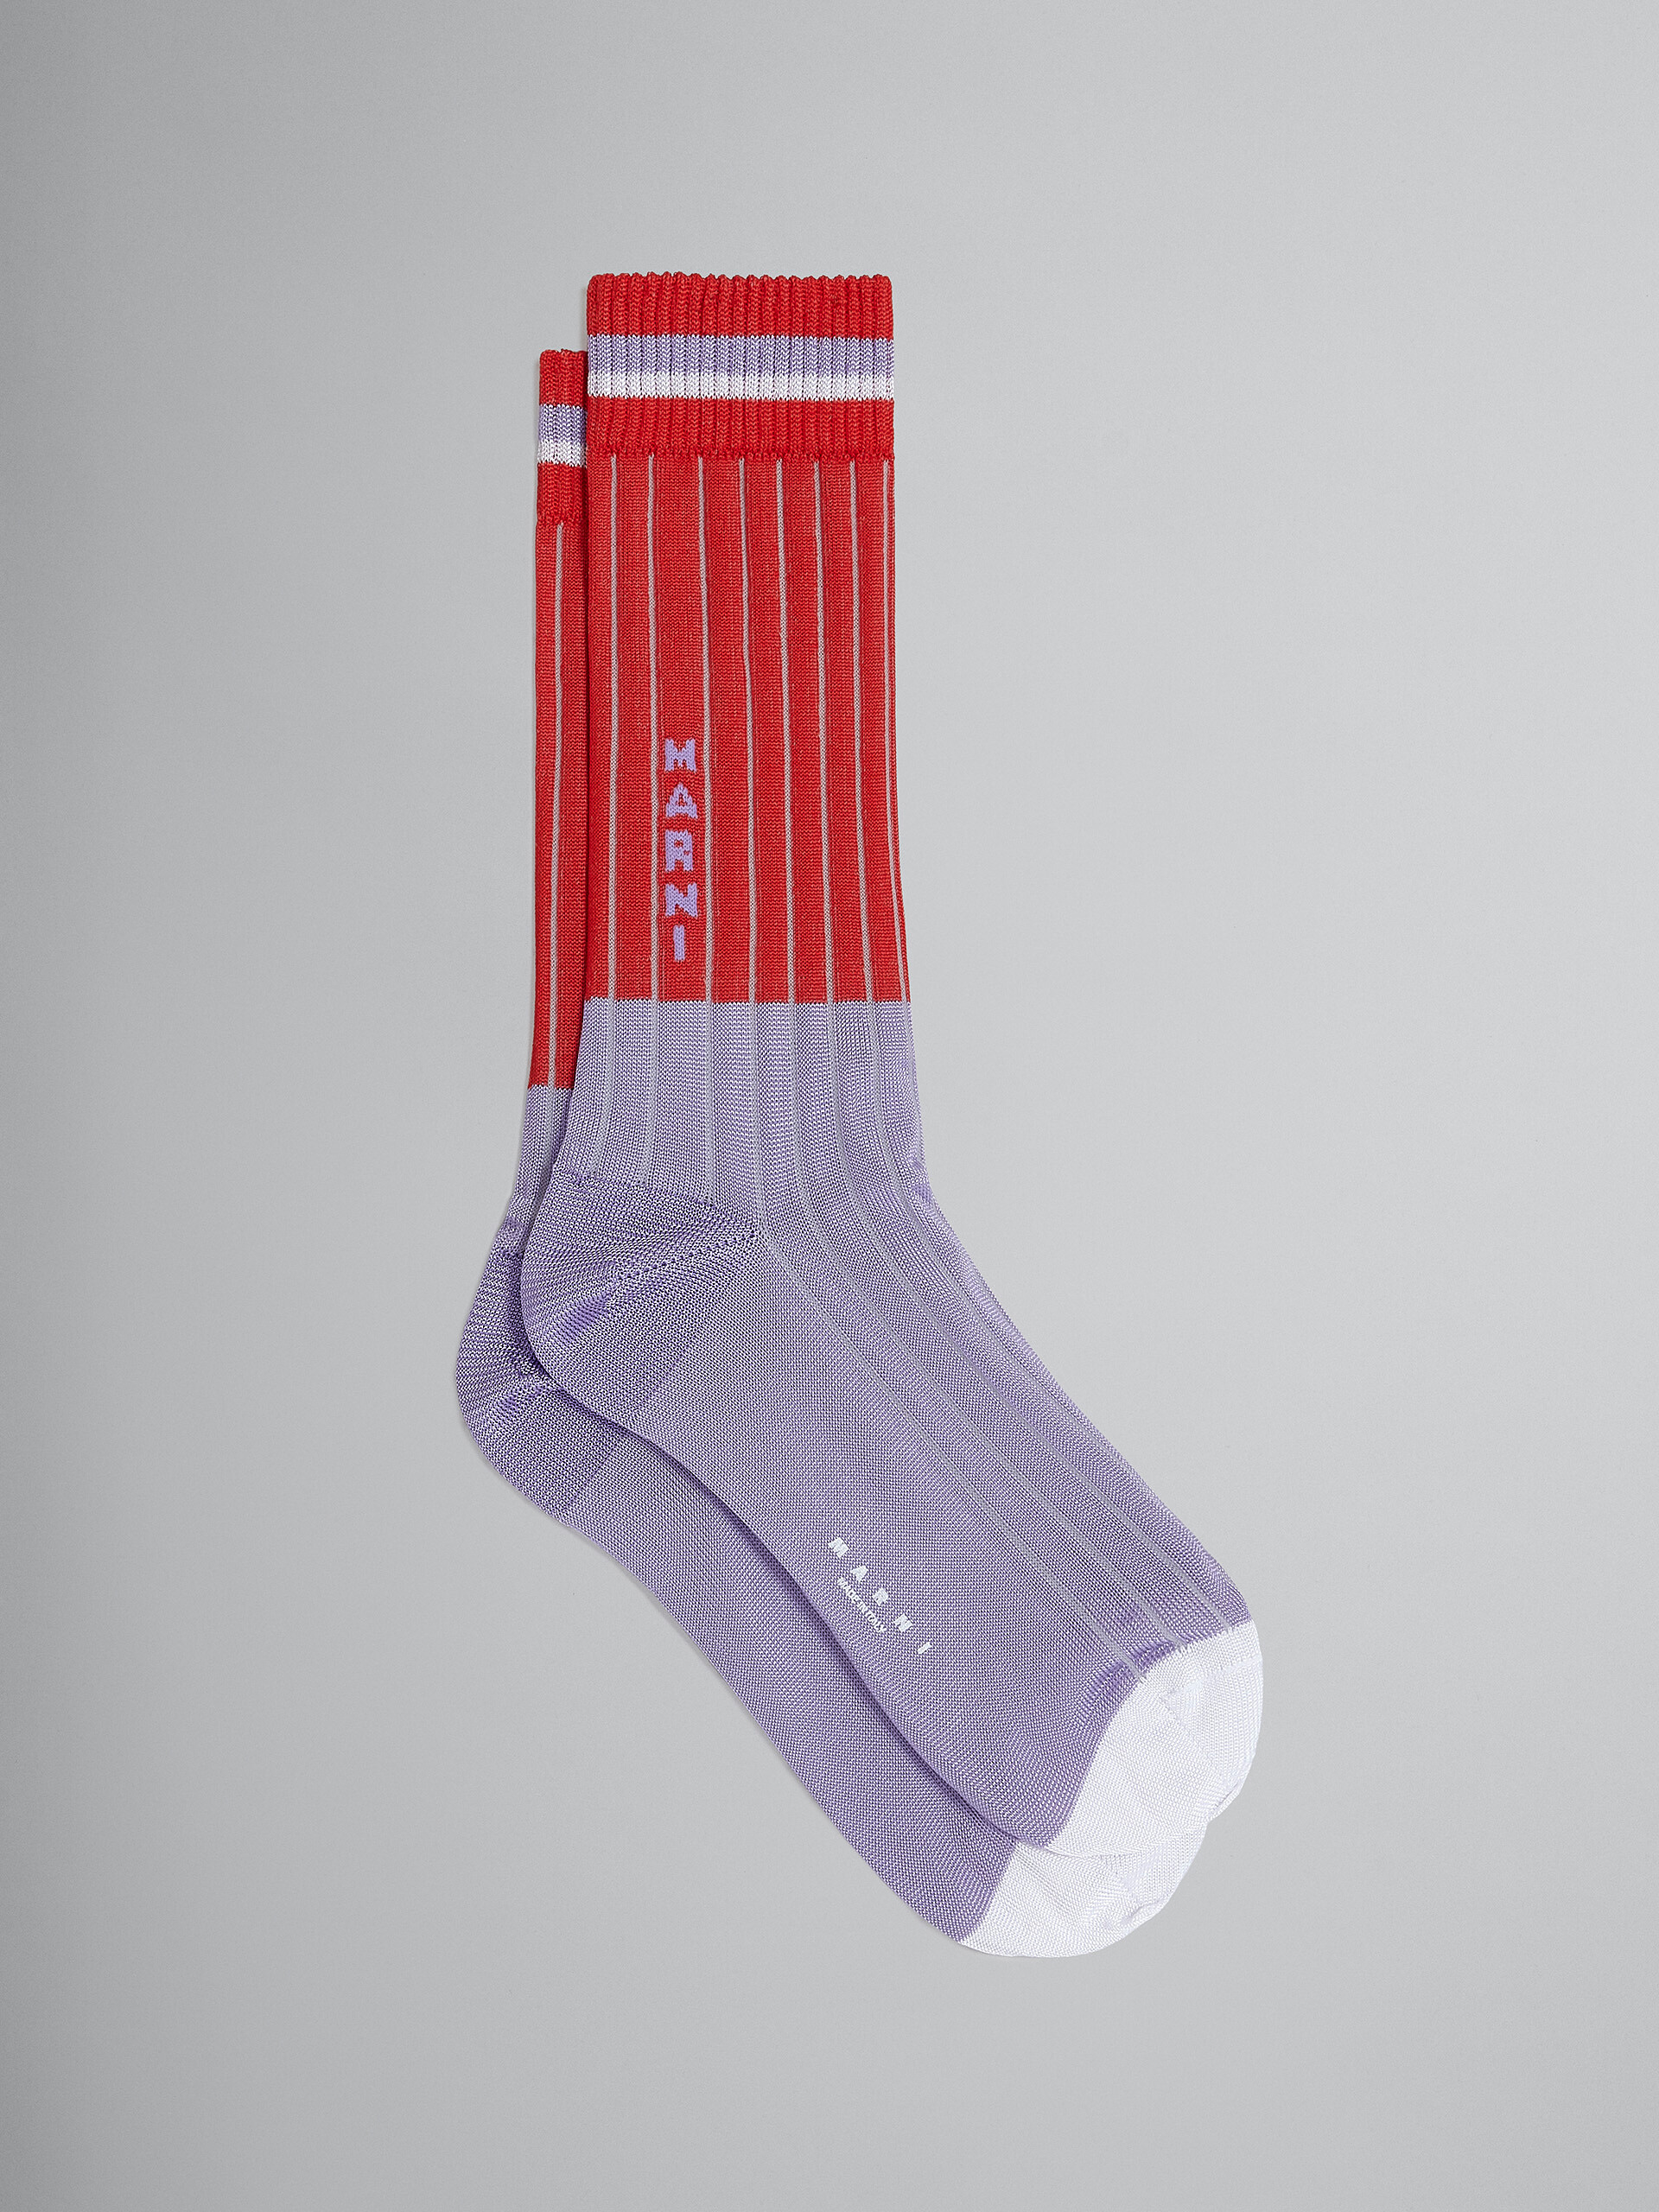 Red two-tone viscose socks - Socks - Image 1